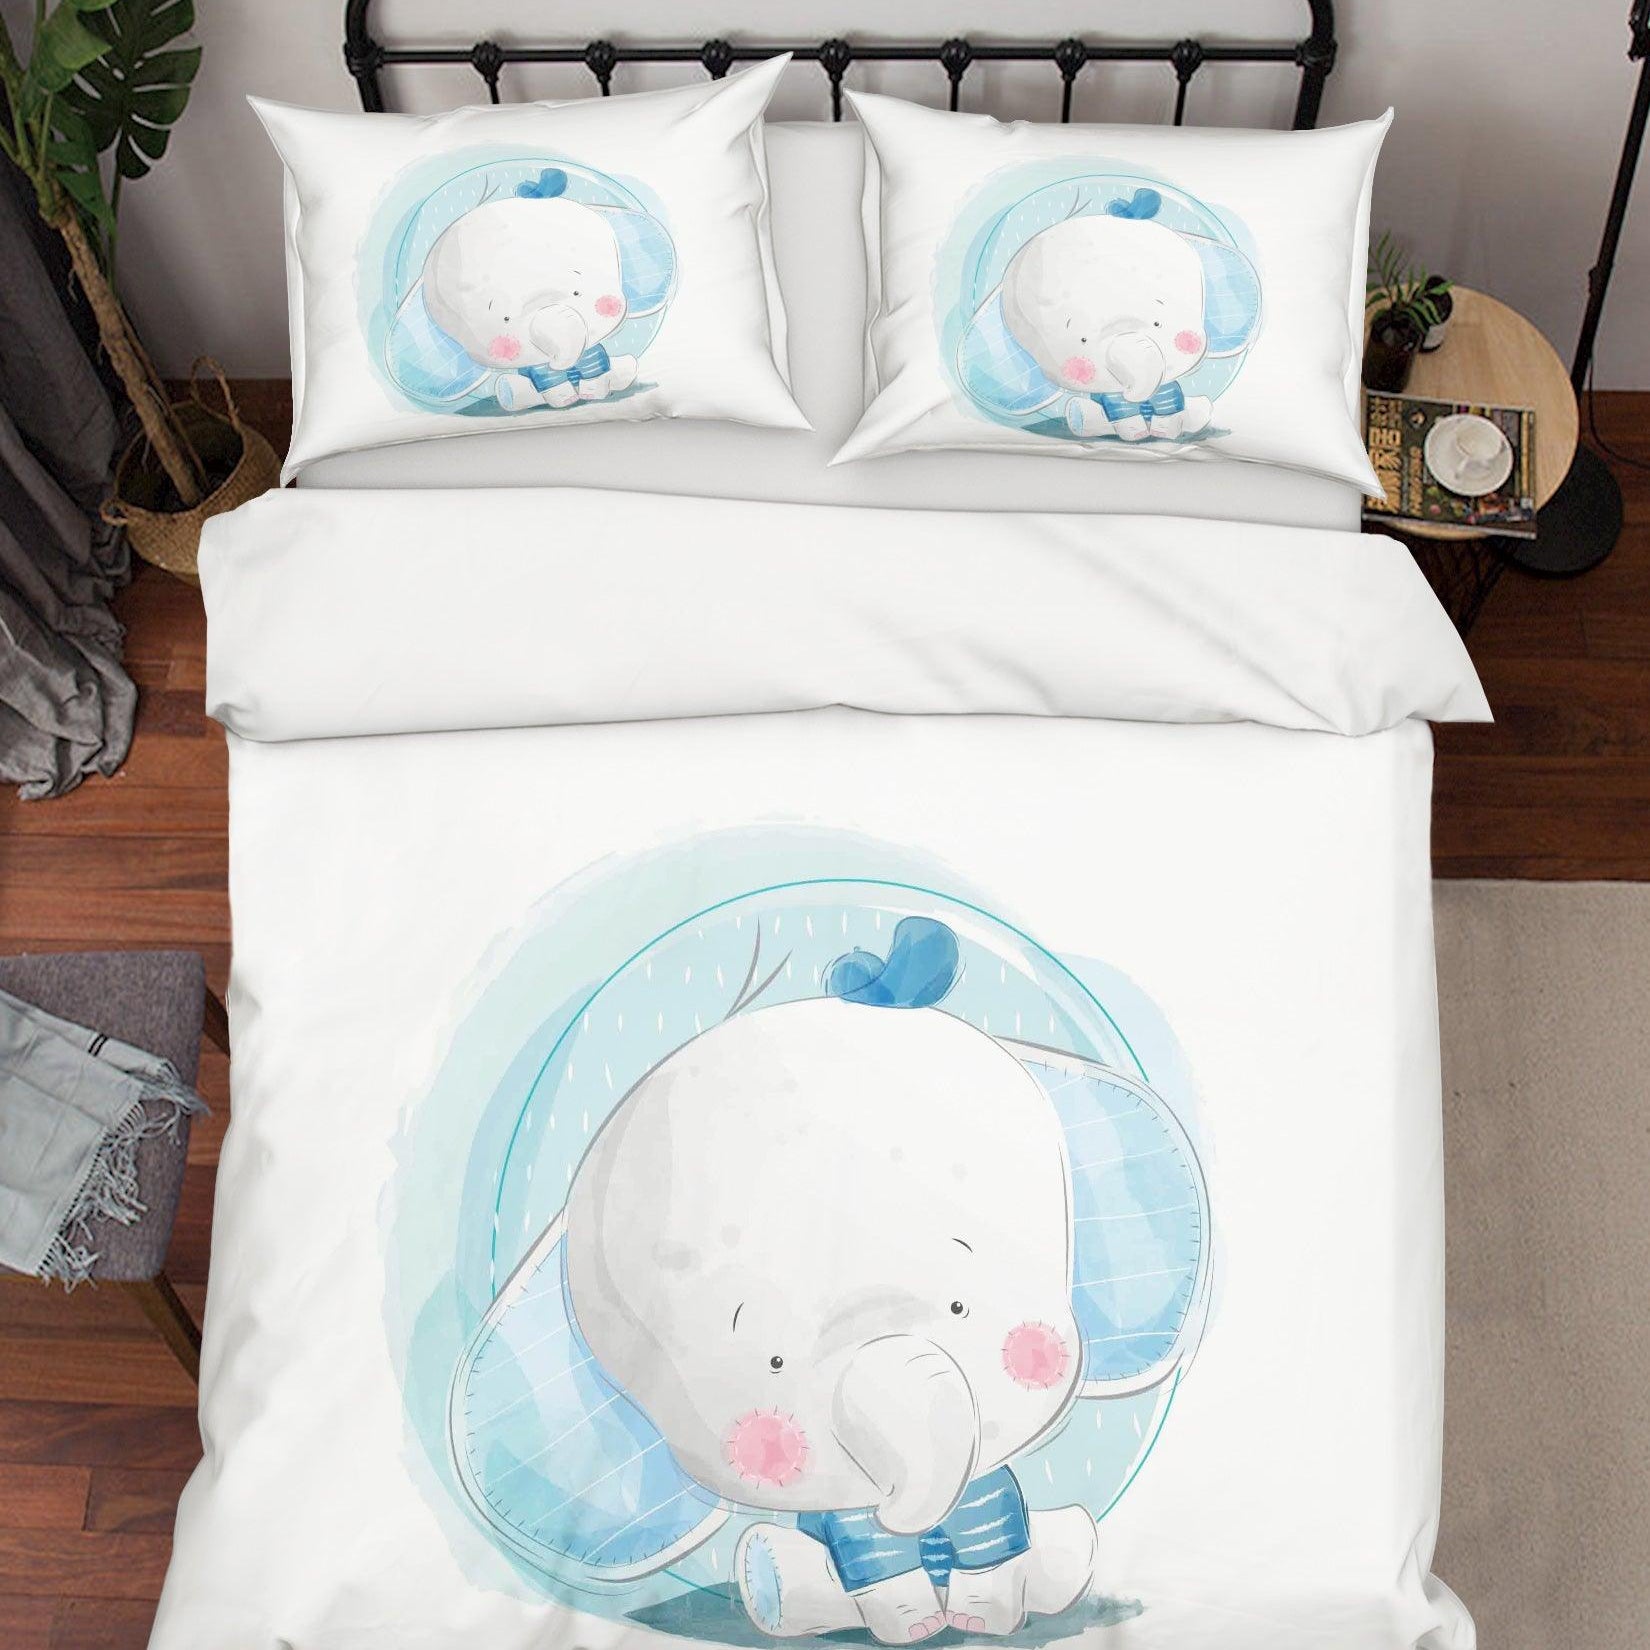 3D White Blue Elephant Quilt Cover Set Bedding Set Duvet Cover Pillowcases SF93- Jess Art Decoration